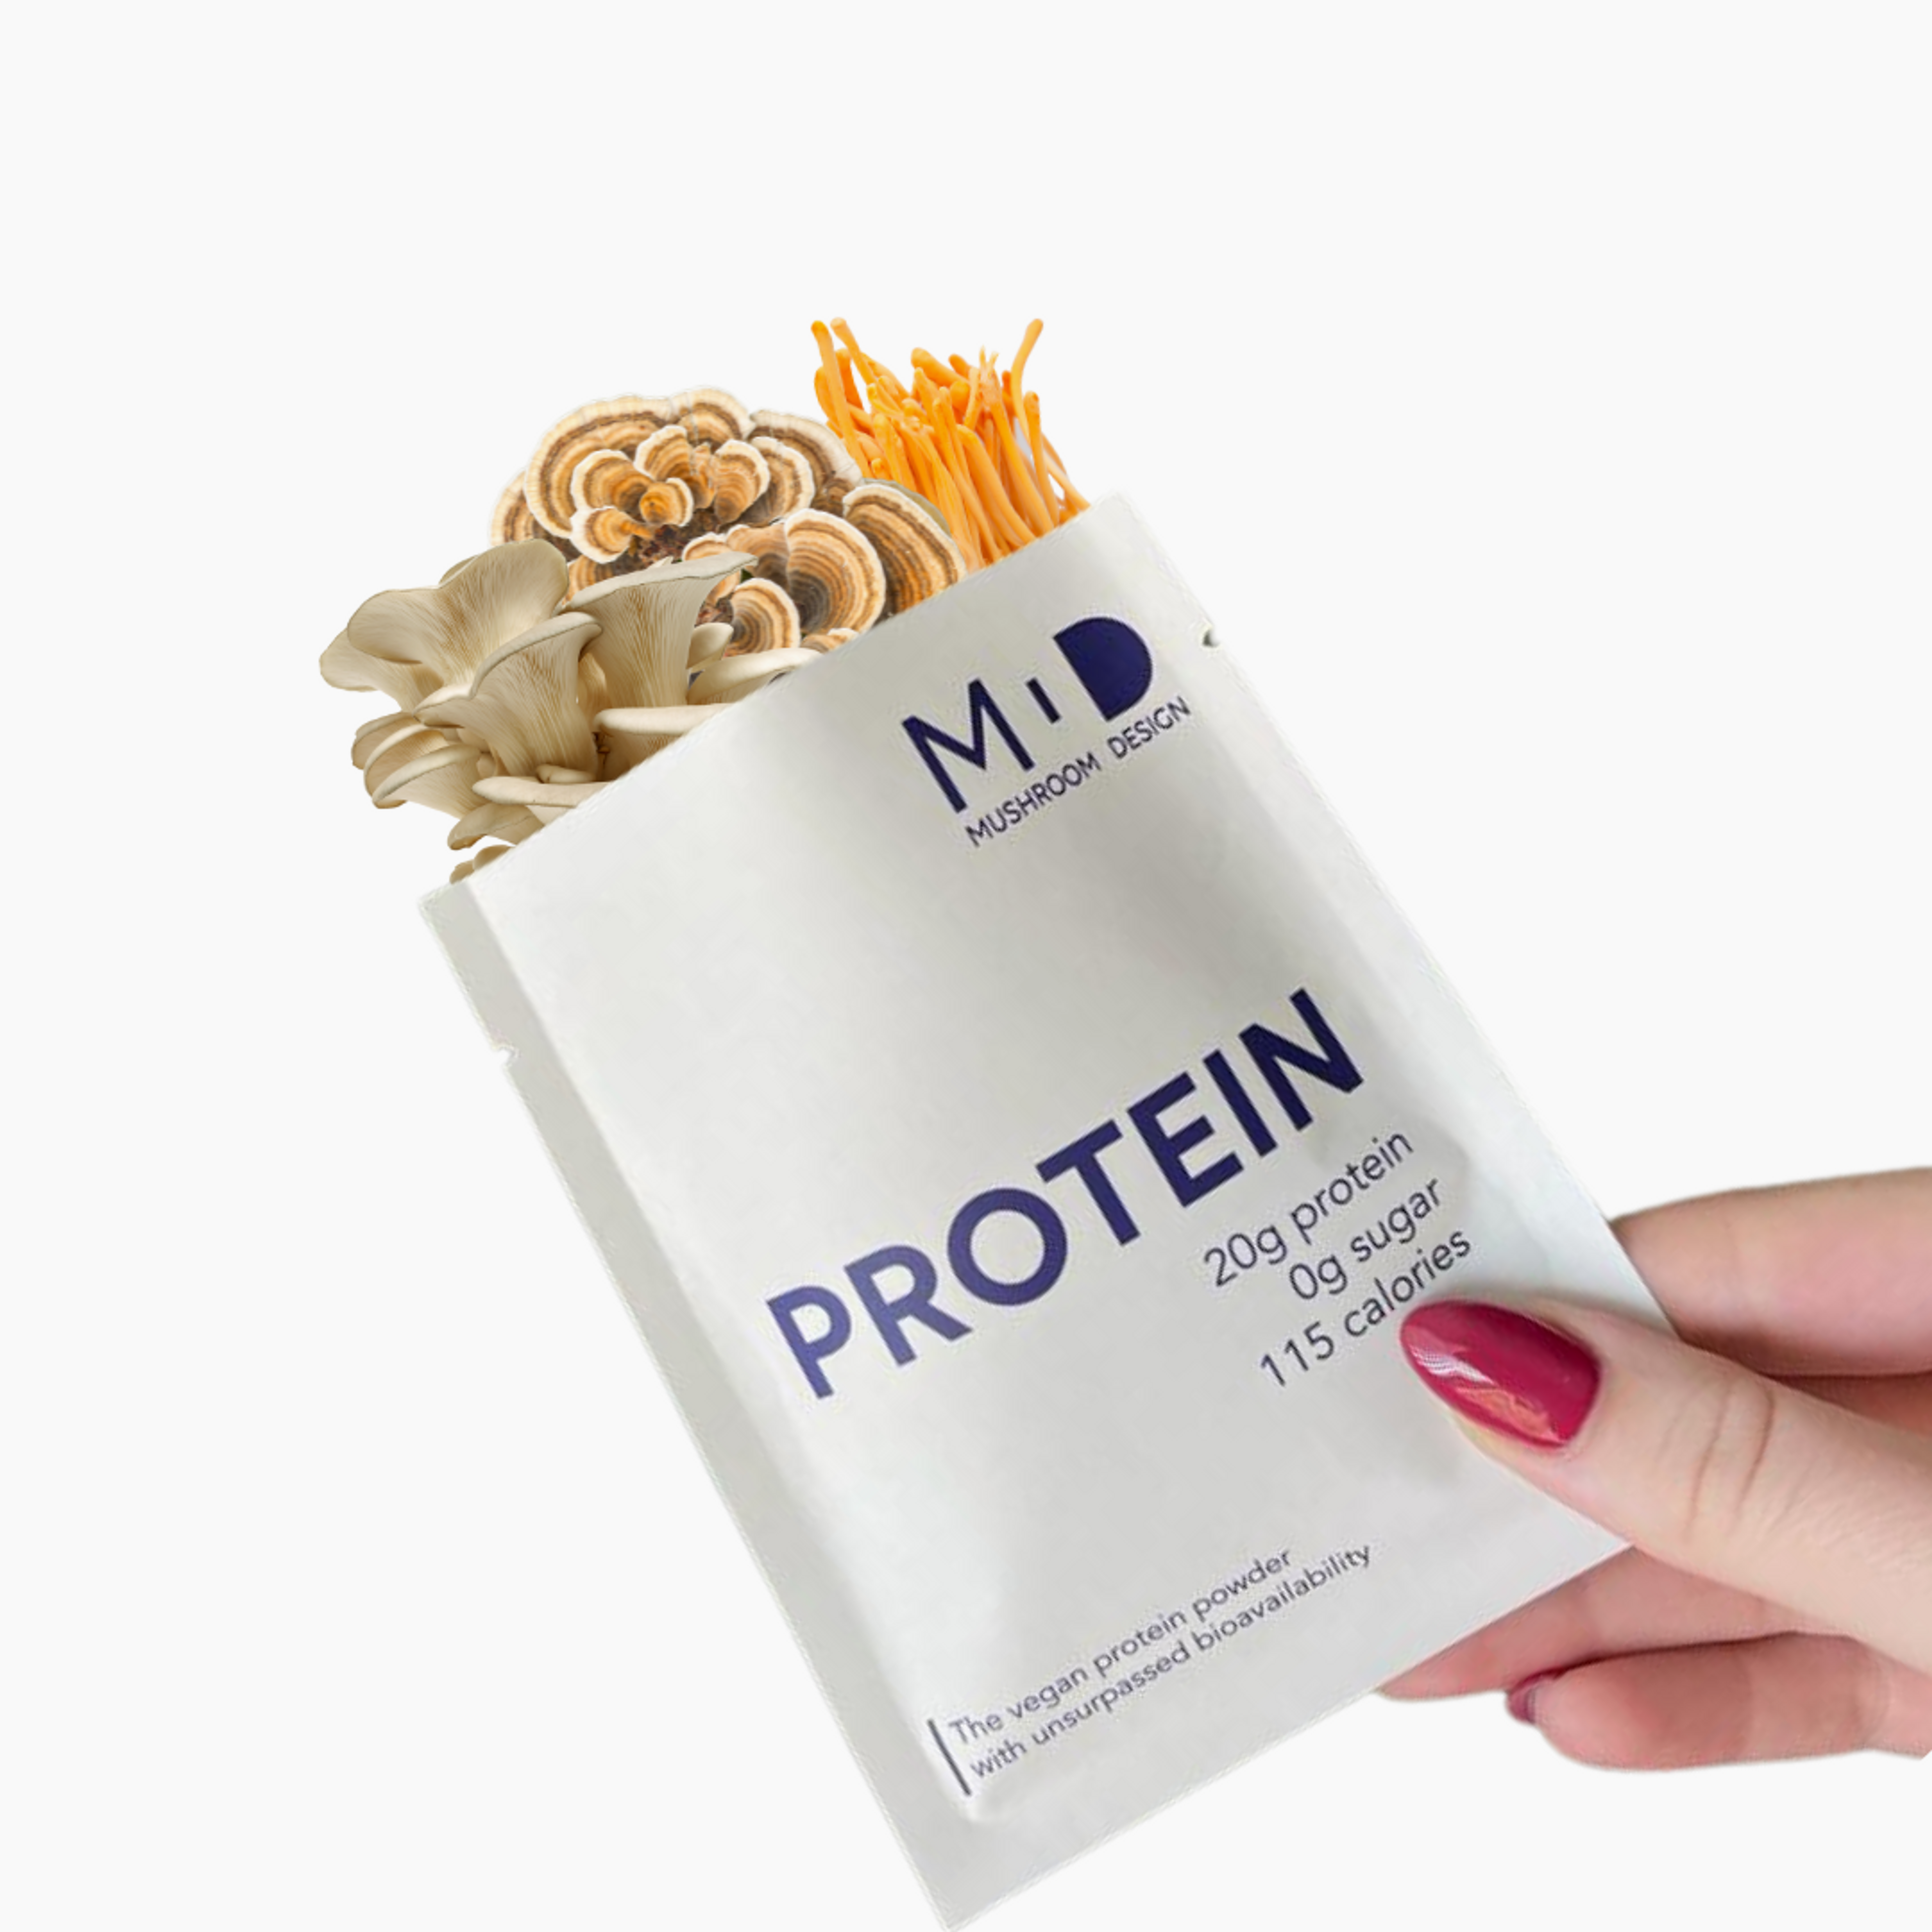 Mushroom Design Vegan Protein Powder - On the Go Single Serving (3 Pack)